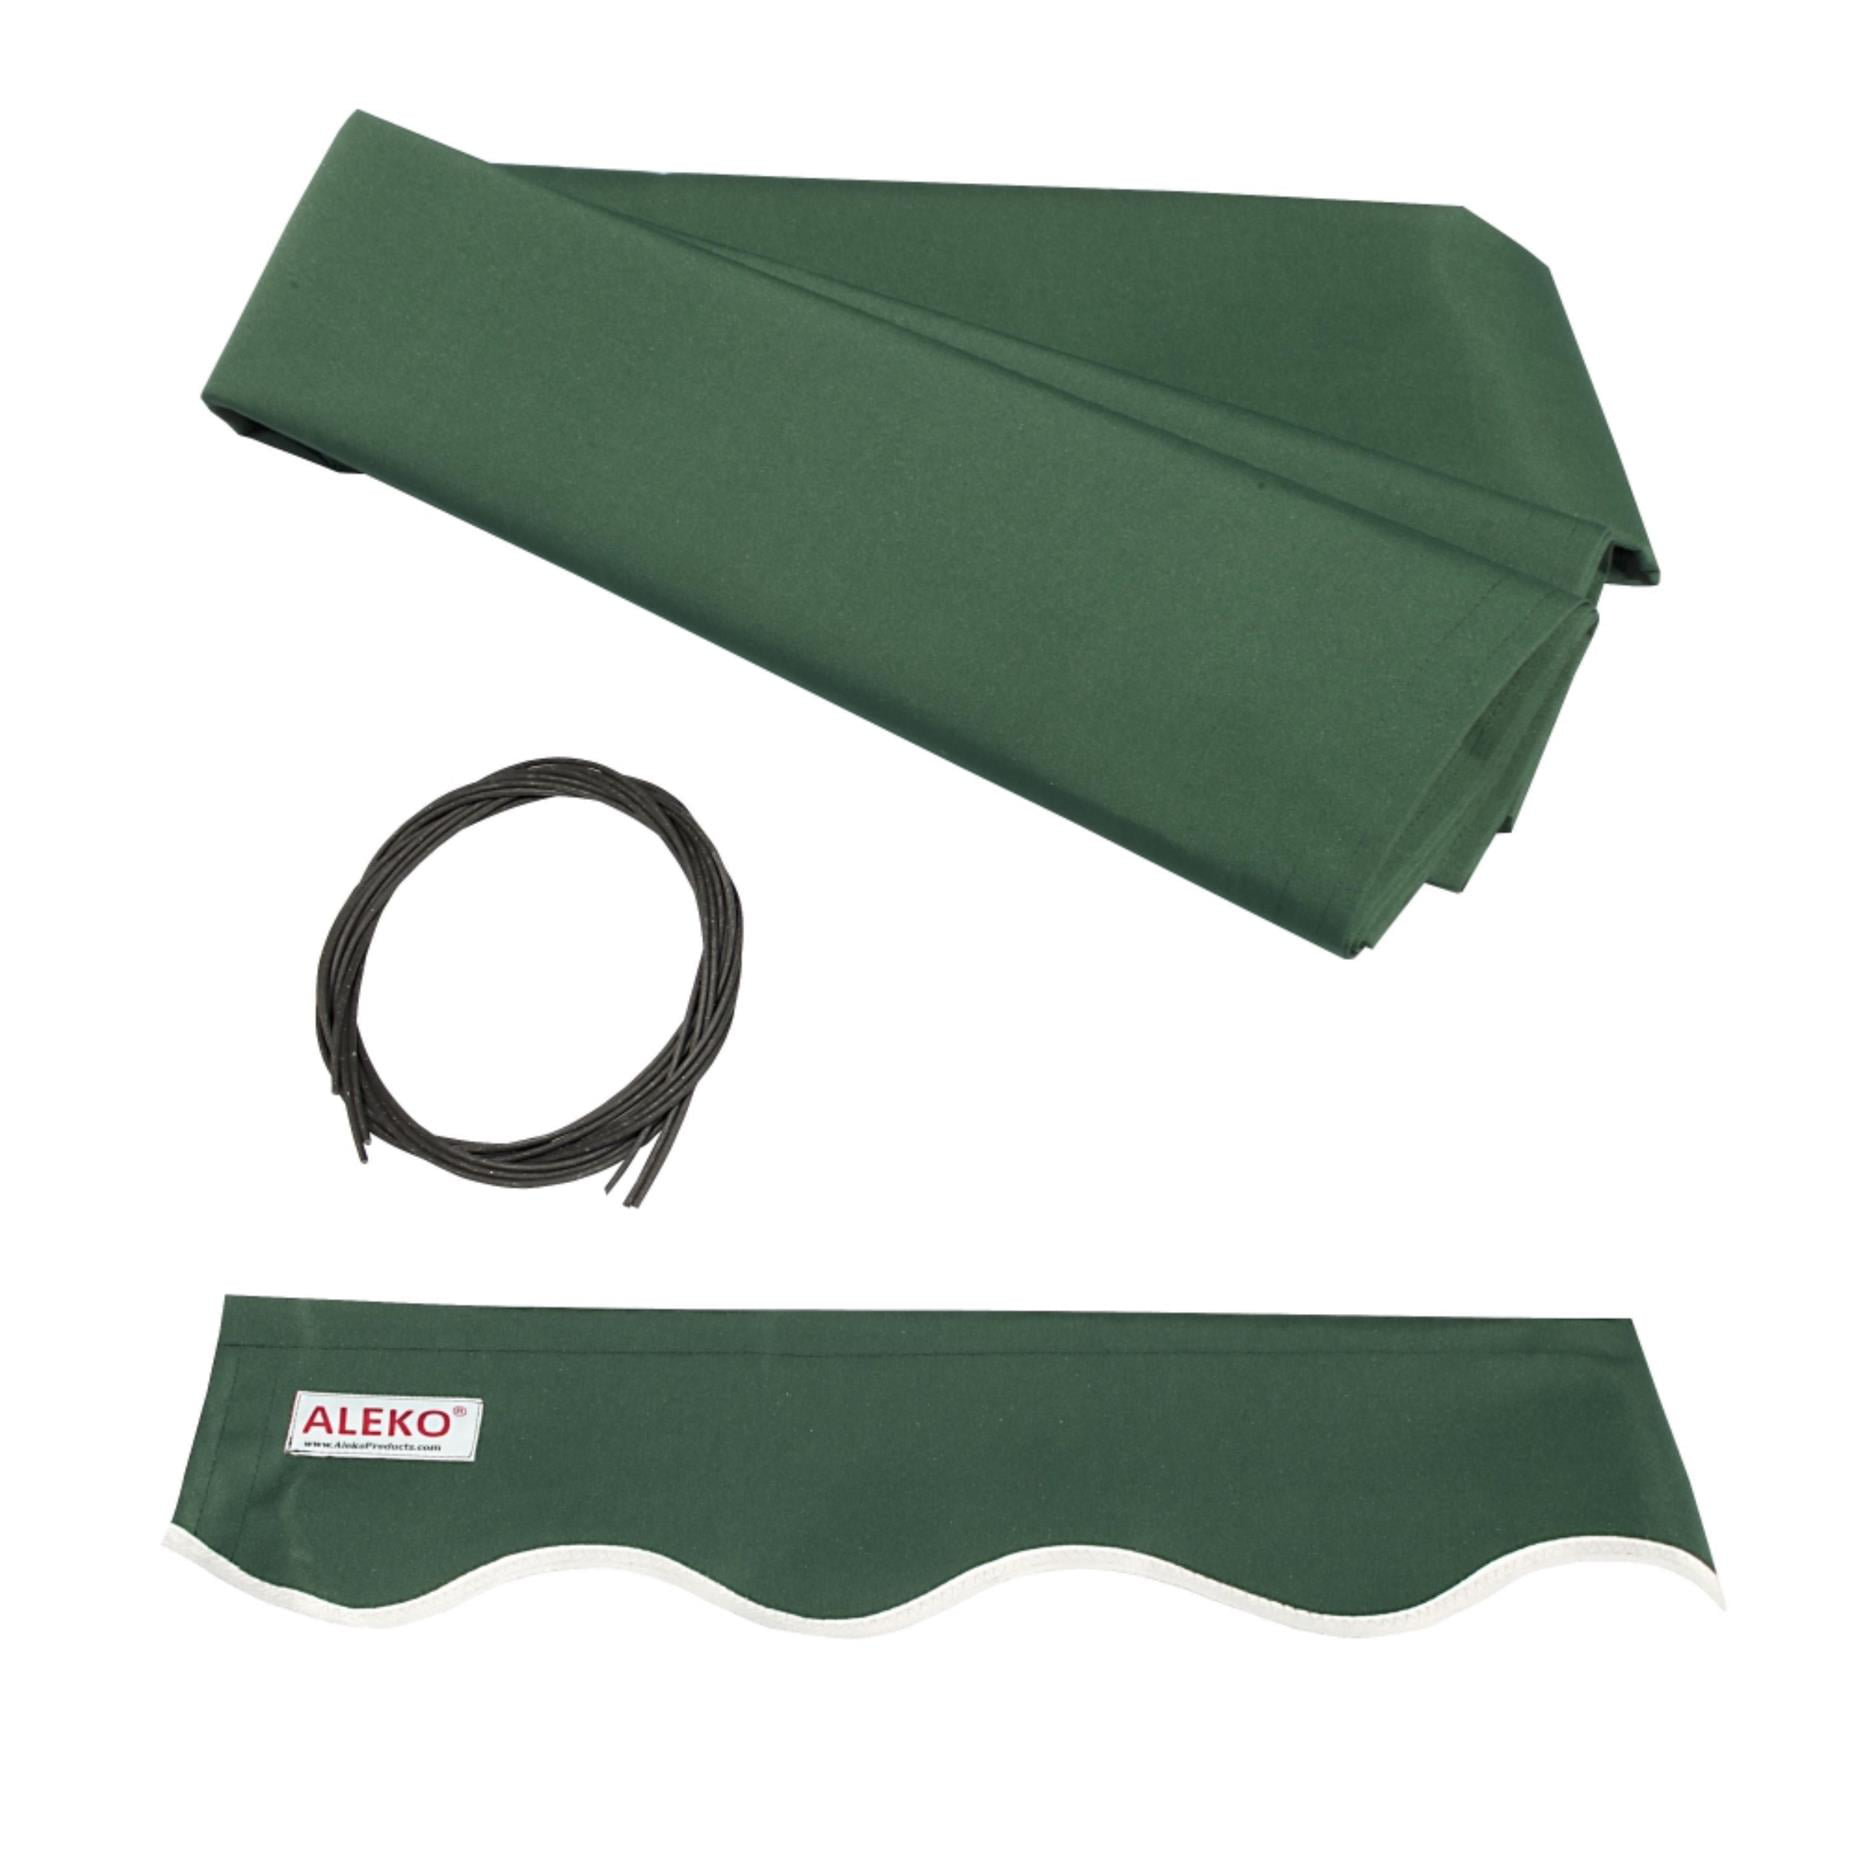 ALEKO Protective Awning Cover Rain Canopy Storage Bag 12 x 10 Feet Green 